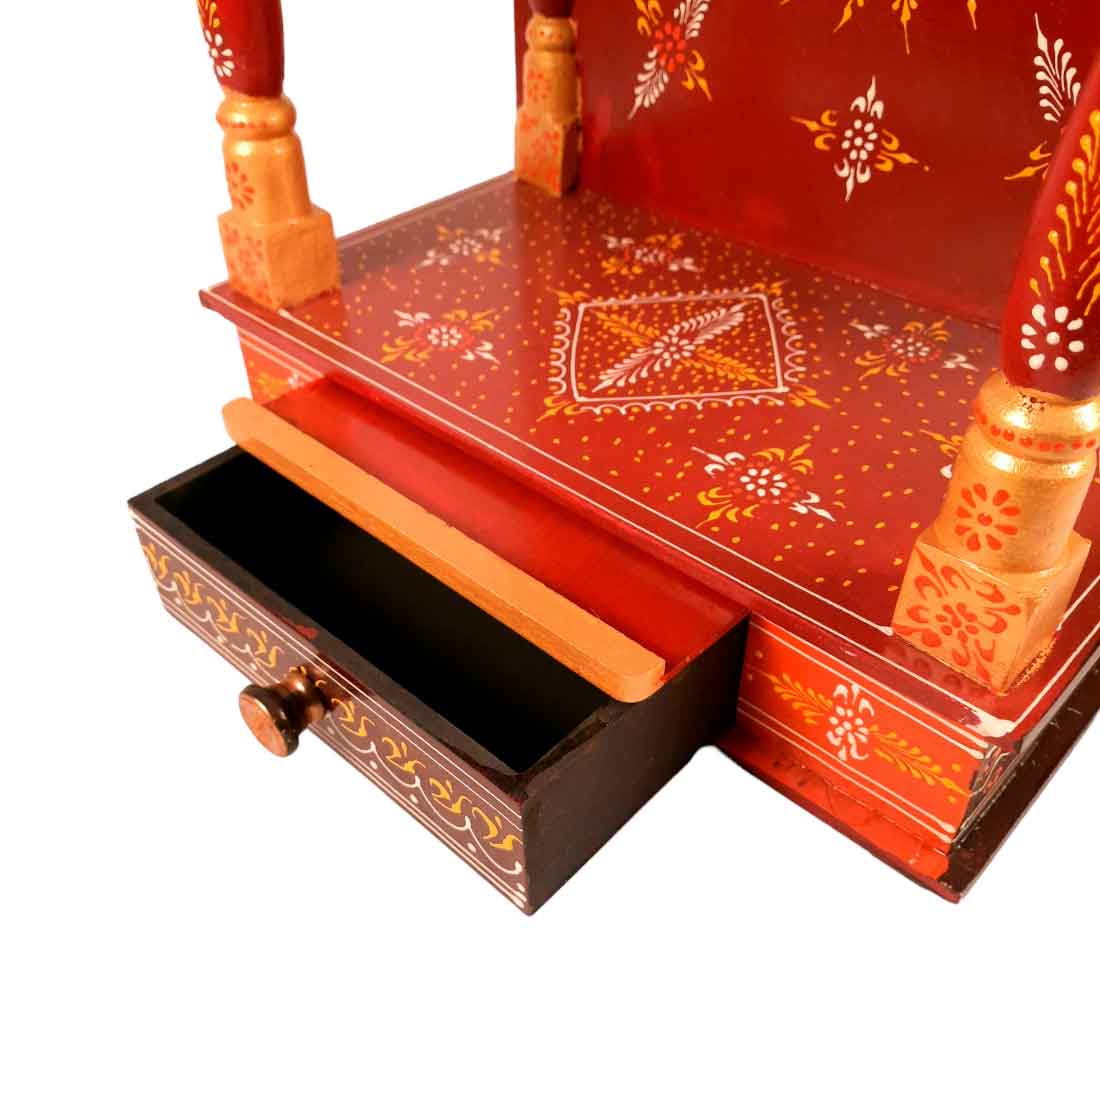 Pooja Mandir | Wooden Temple for Home Big Size -25 Inch - Apkamart #Color_Maroon